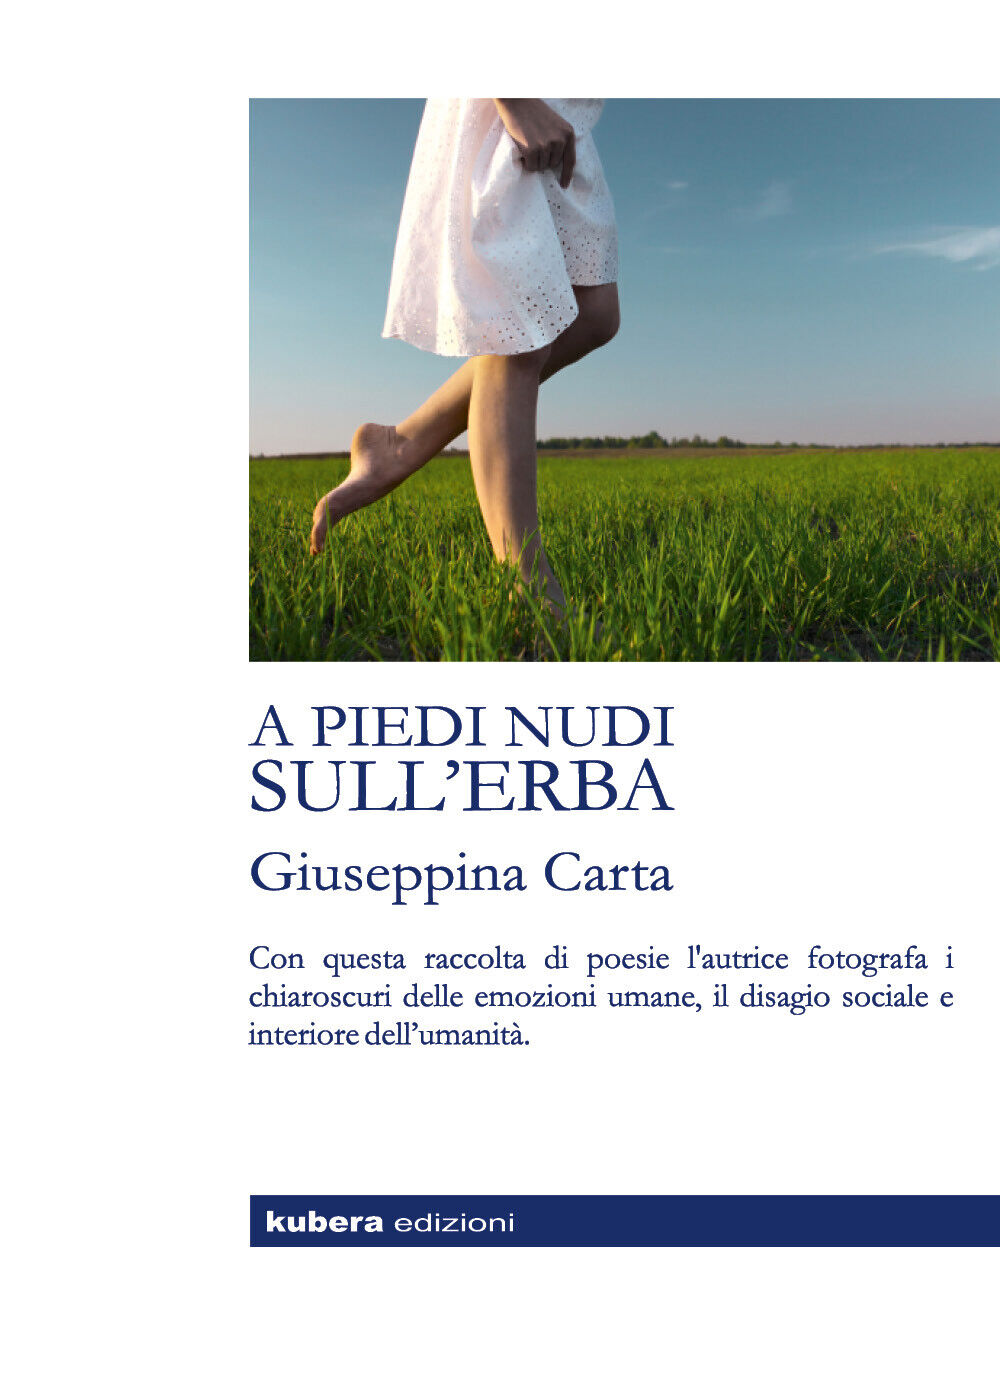 A piedi nudi sulL'erba di Giuseppina Carta,  2020,  Kubera Edizioni